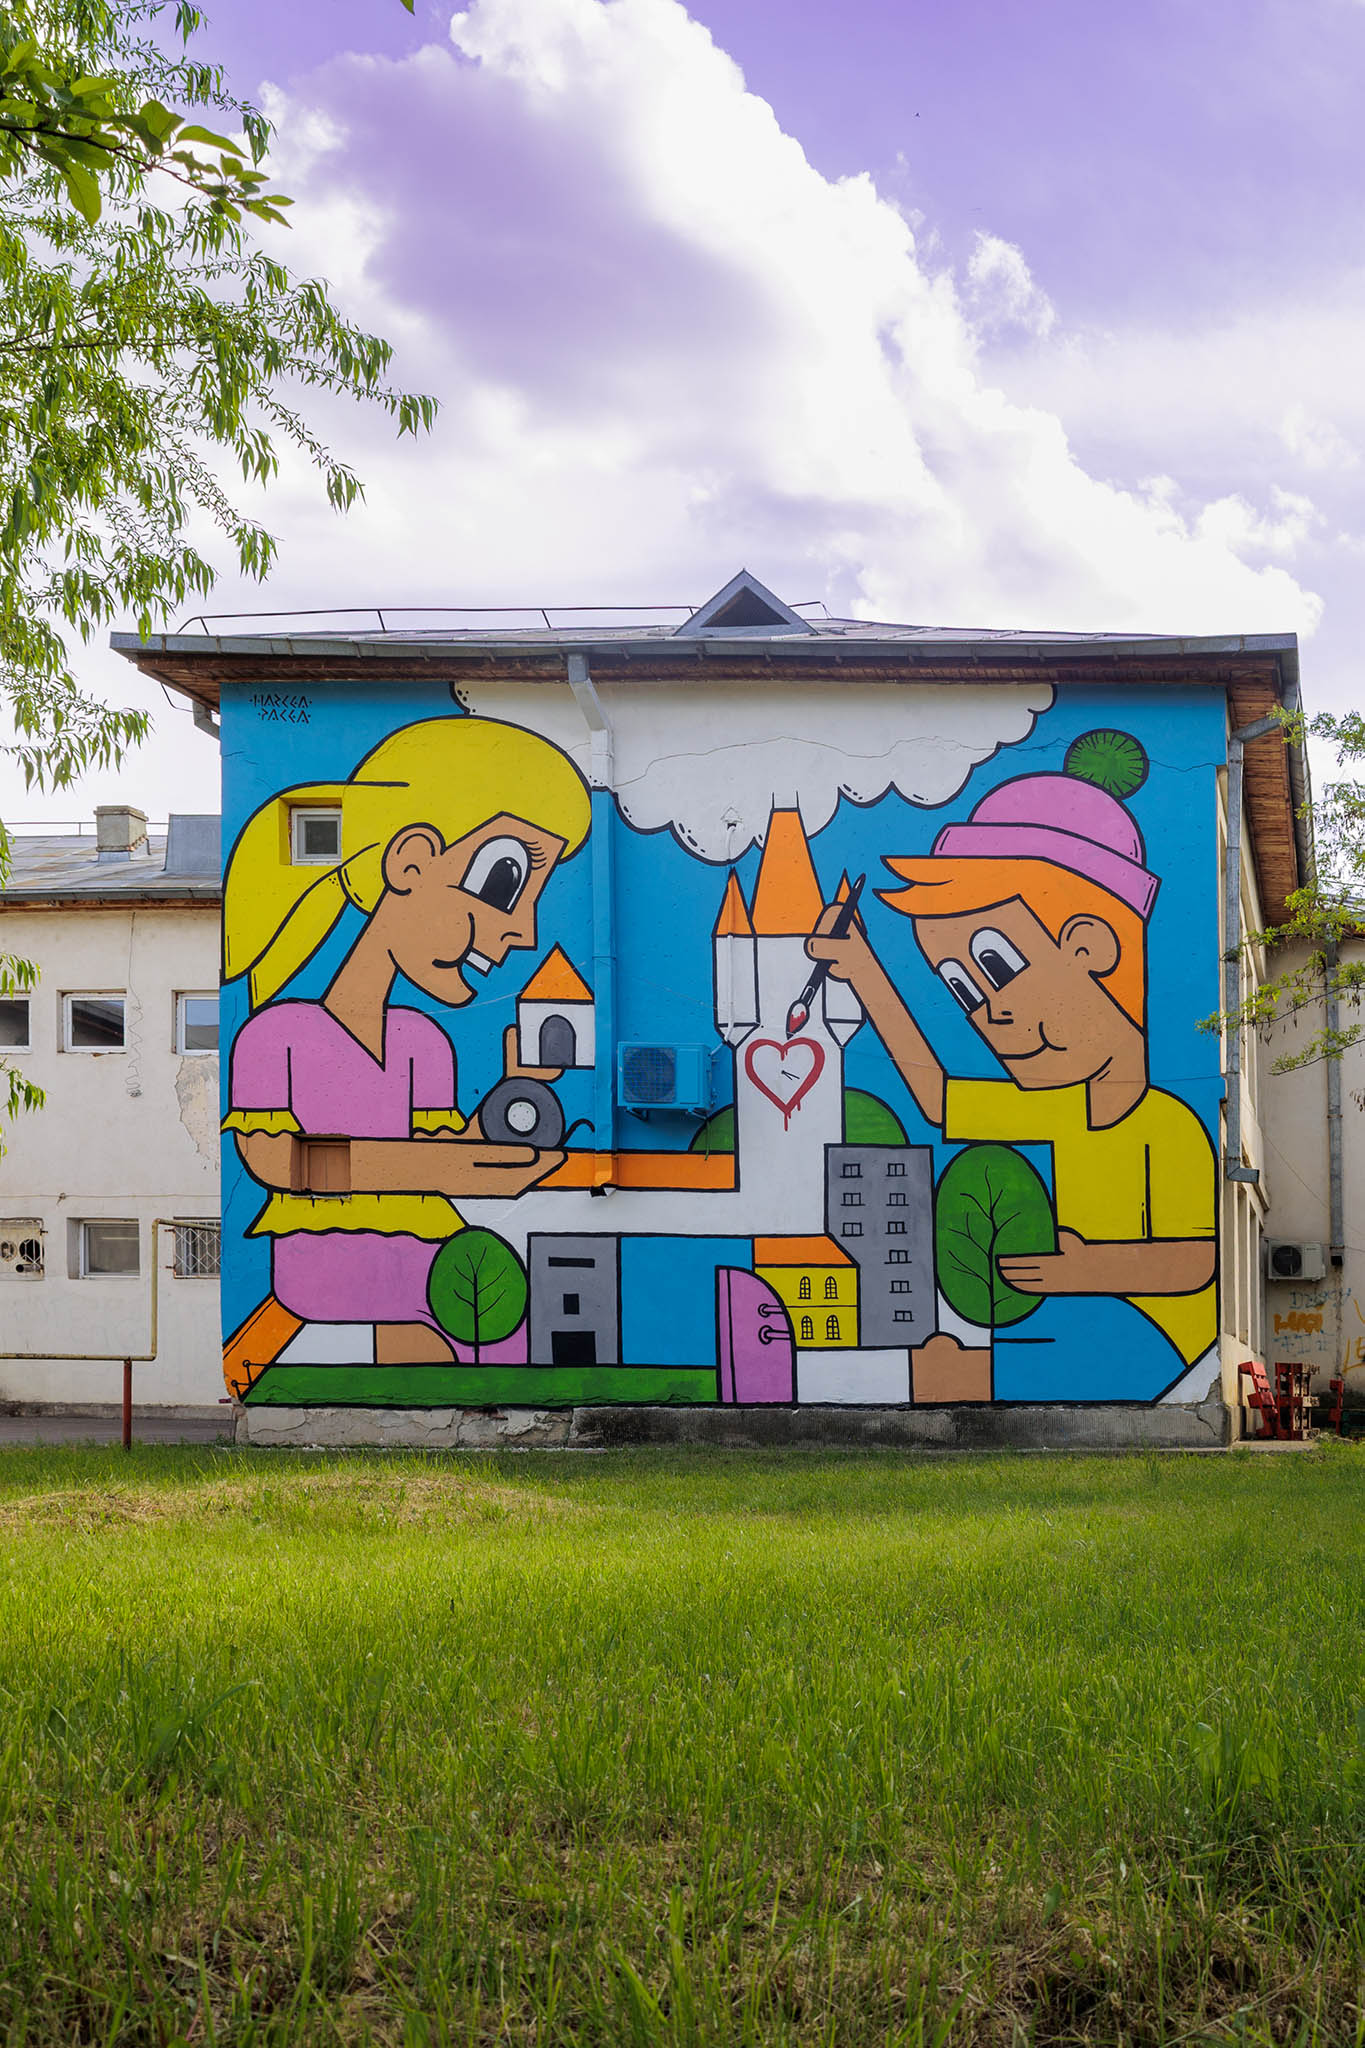 2024 Romanian Street Art Pisica Patrata & Harcea Pacea in Iasi